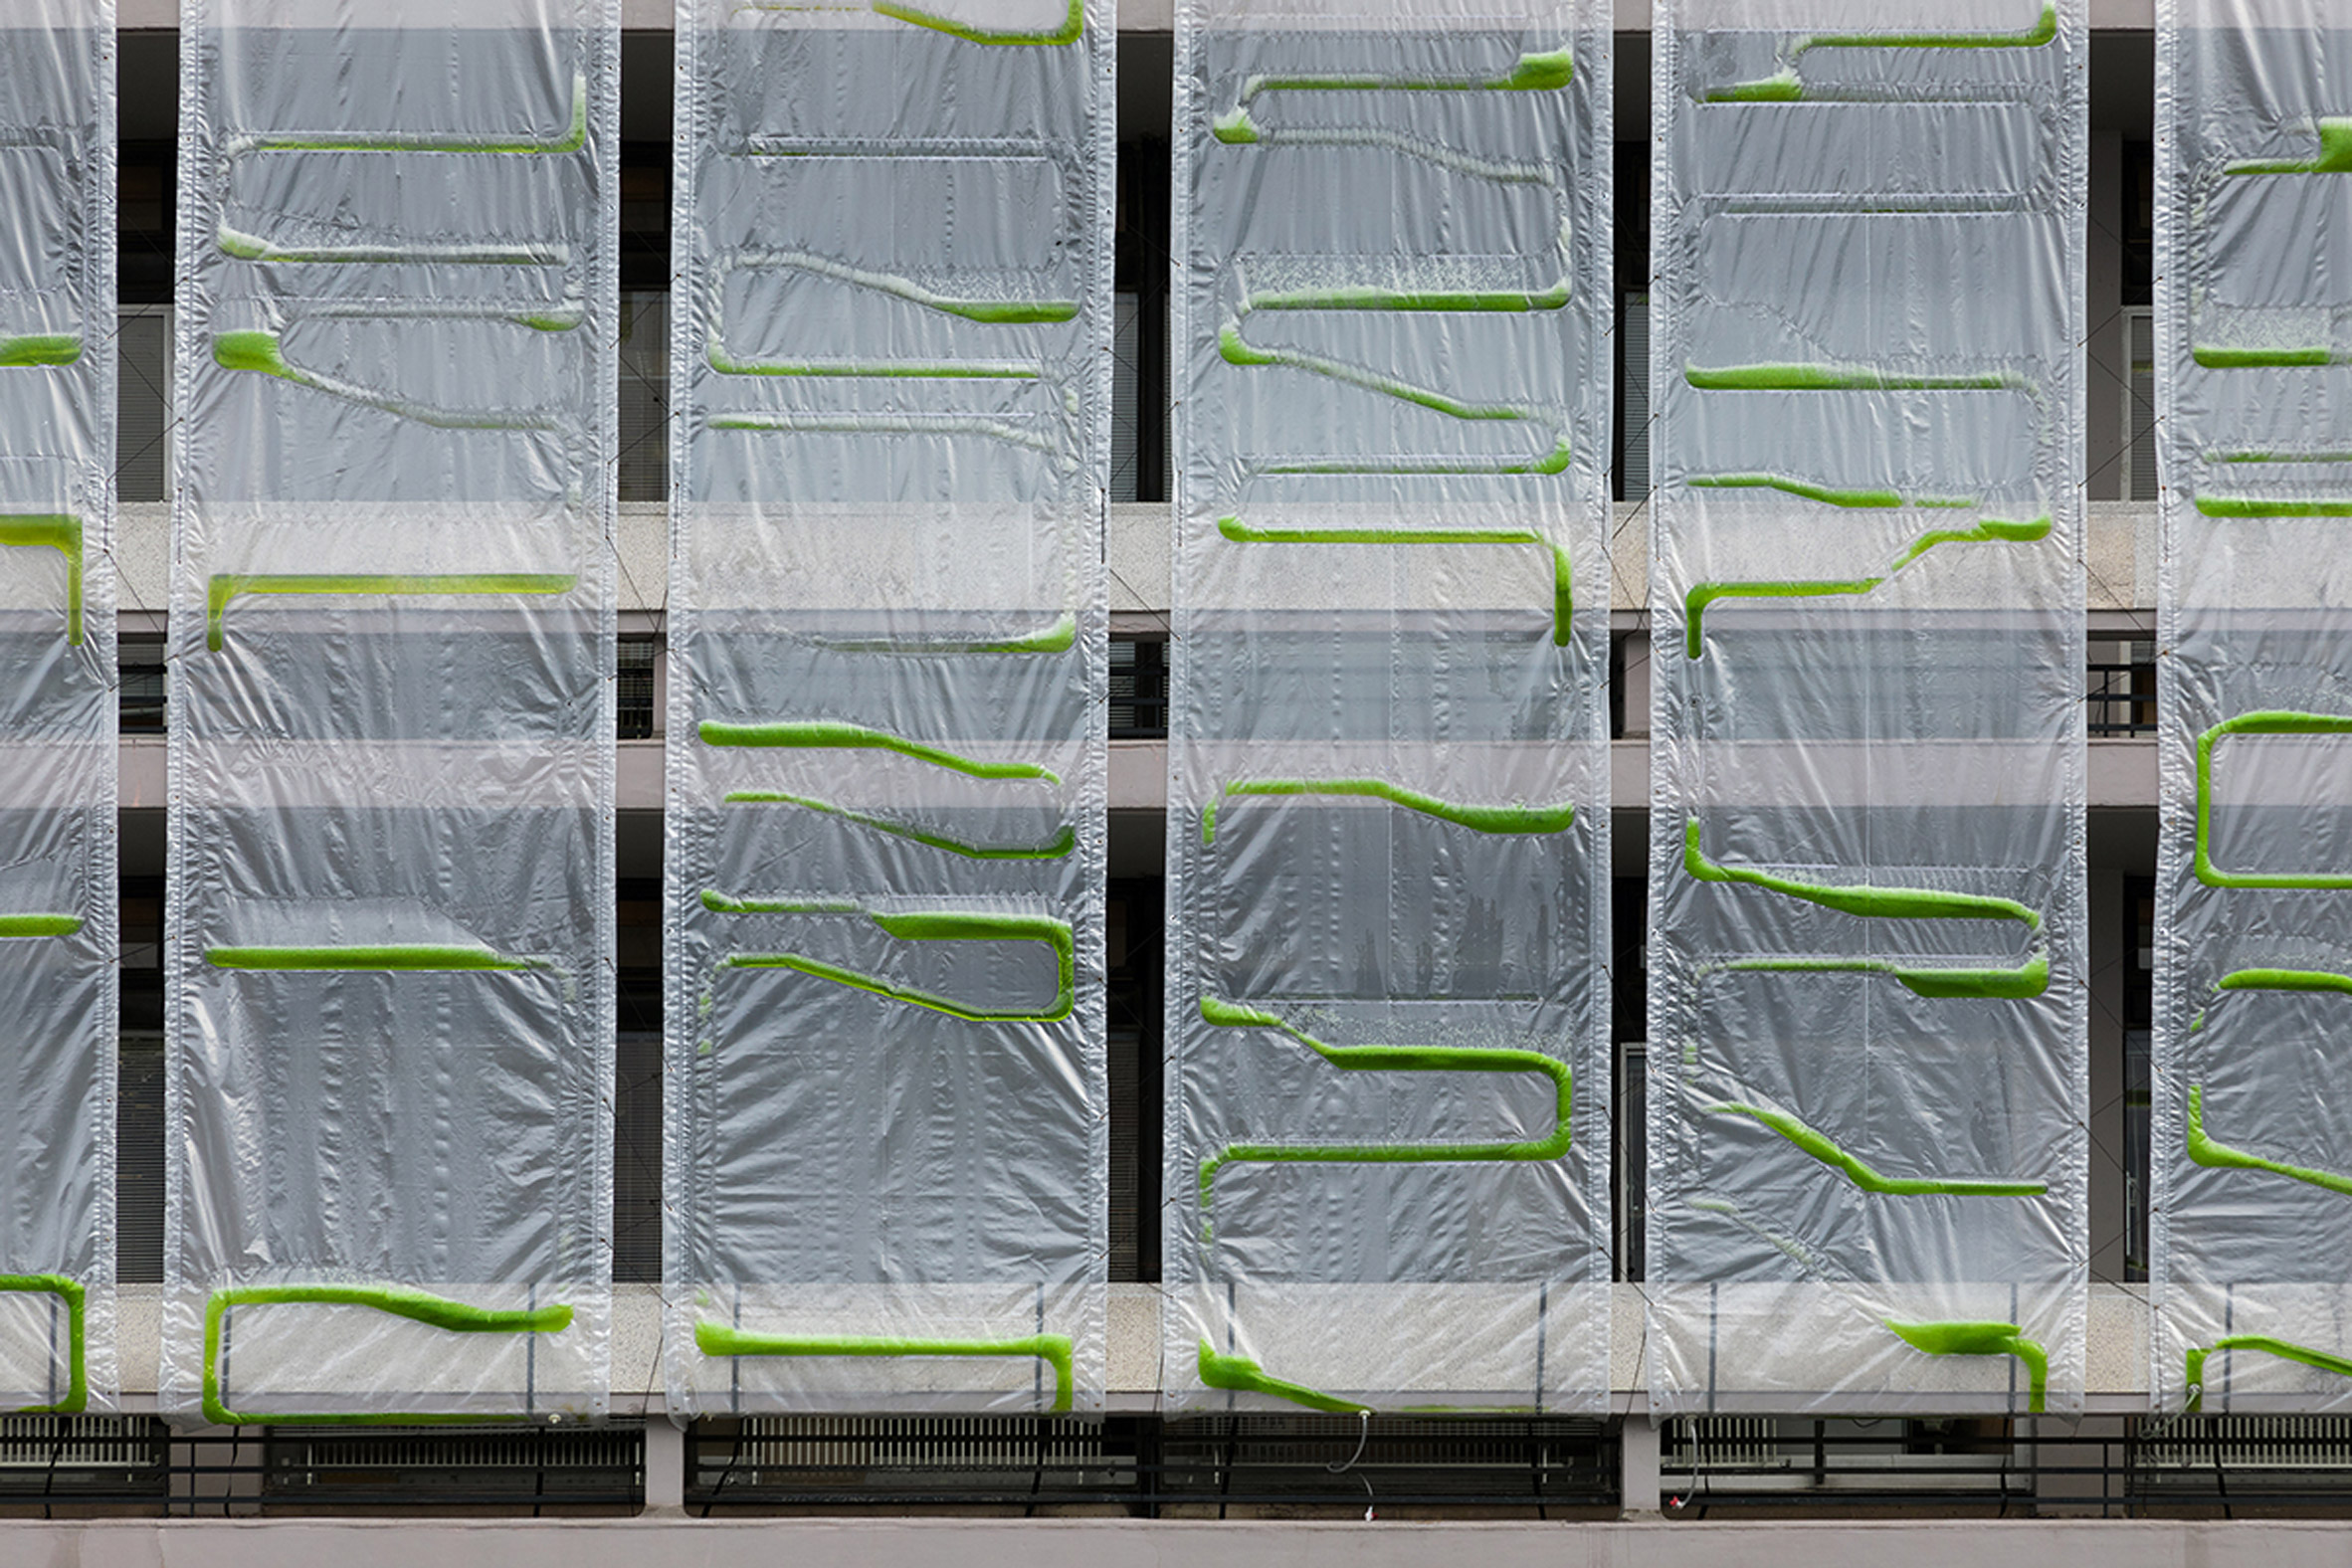 Algae curtain by ecoLogicStudio